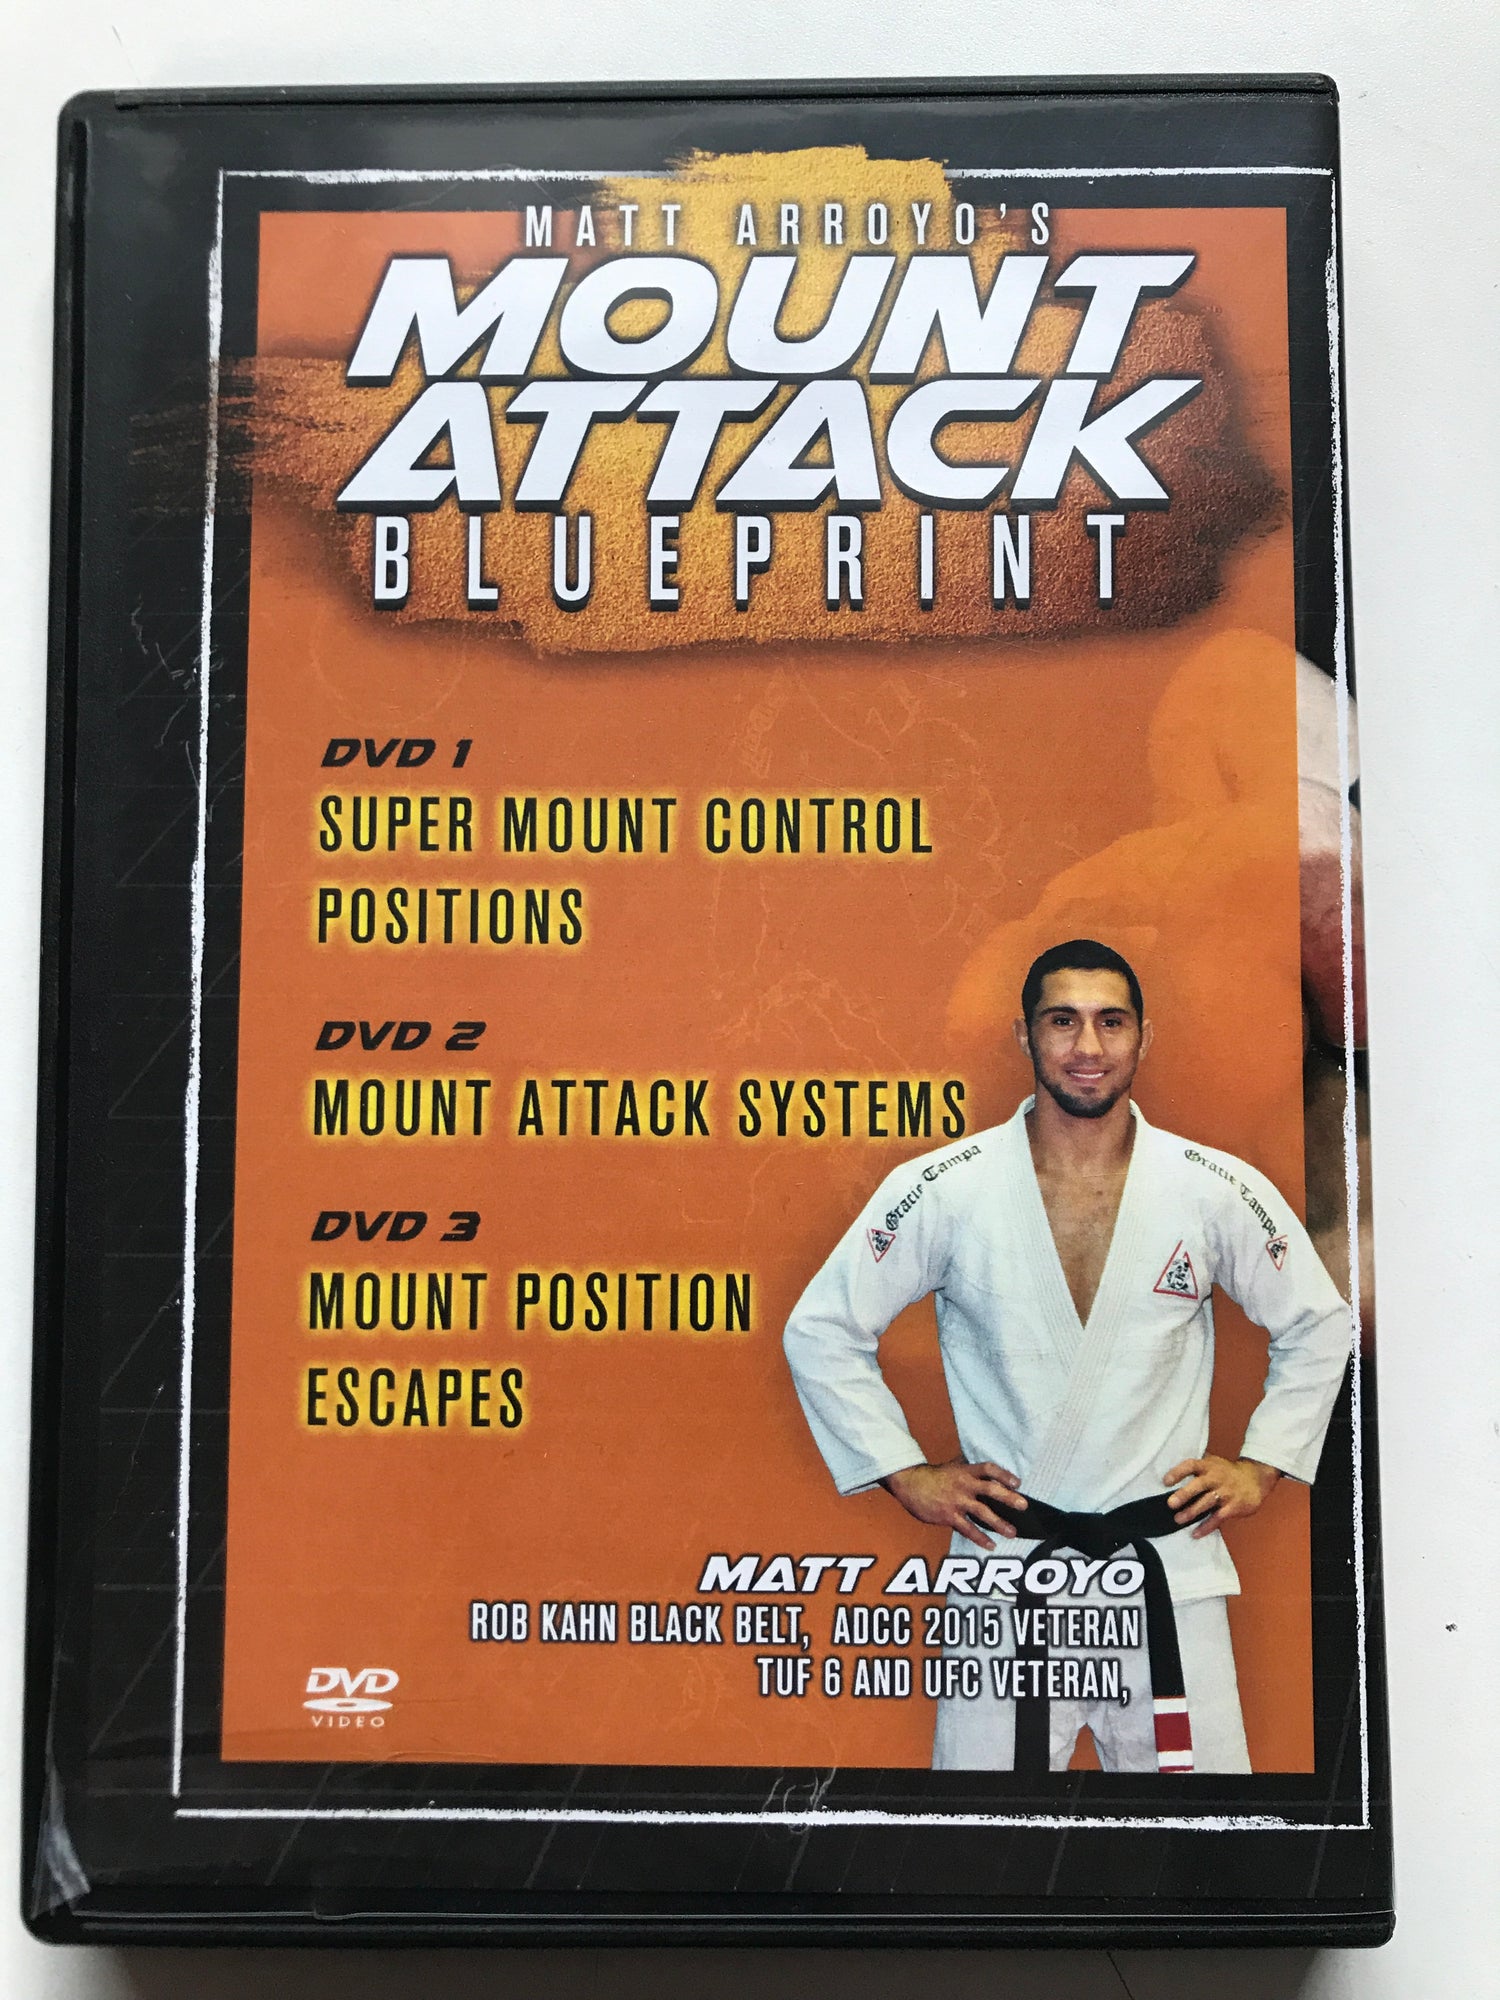 Mount Attack Blueprint 3 DVD Set by Matt Arroyo - Budovideos Inc